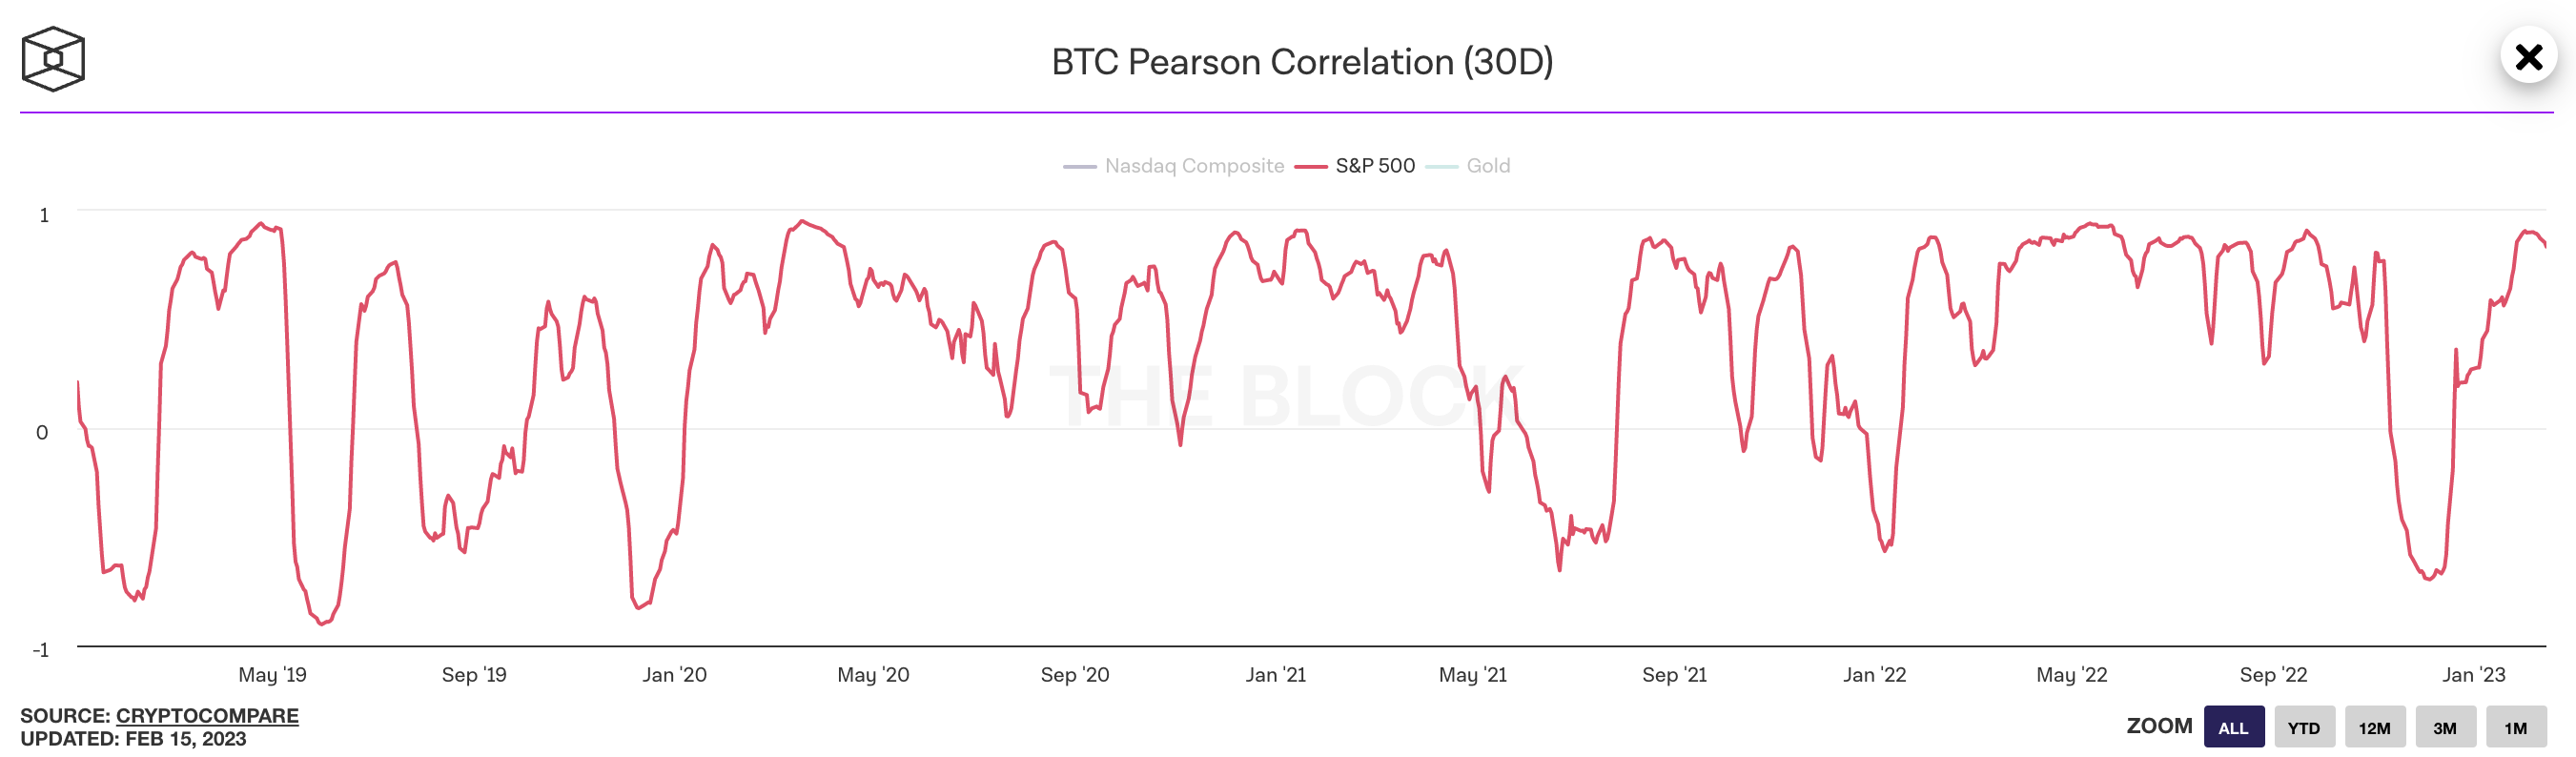 BTC Pearson Correlation.  Source: TheBlock